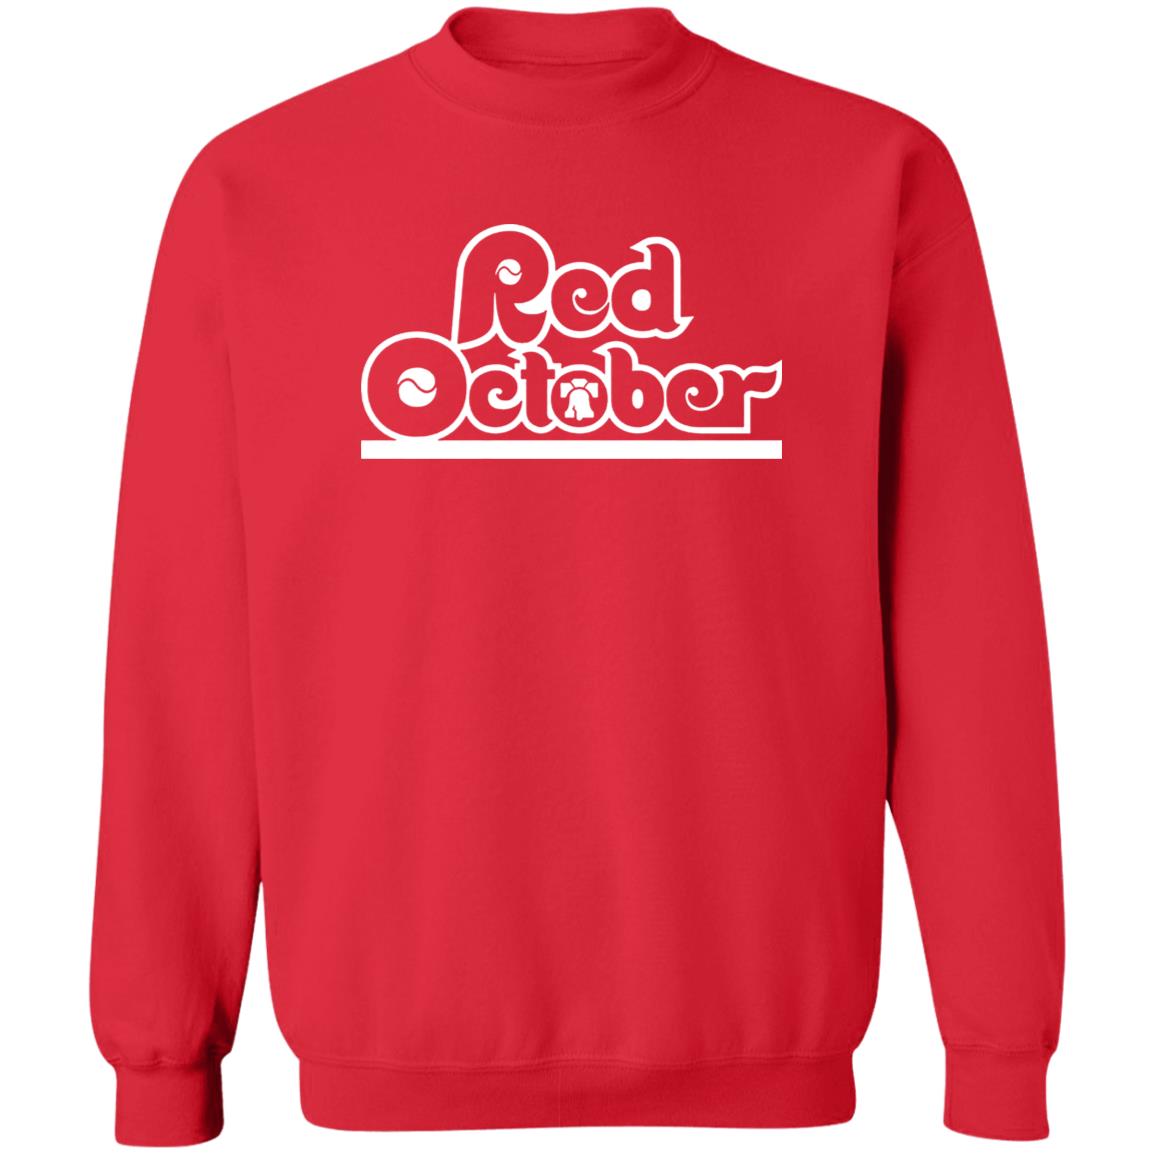 Red October Phillies Shirt